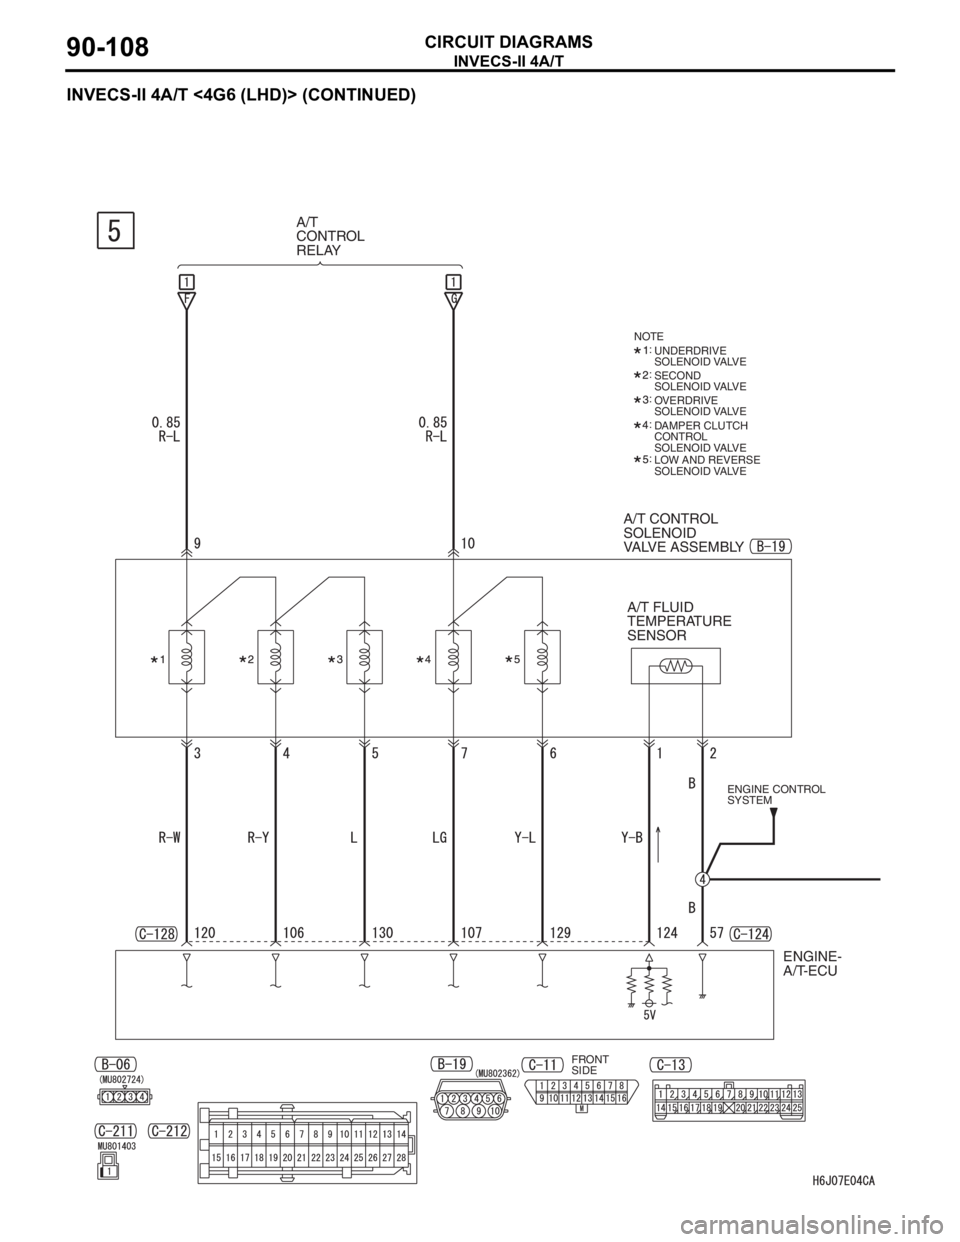 MITSUBISHI LANCER 2006  Workshop Manual INVECS-II 4A/T
CIRCUIT DIAGRAMS90-108
INVECS-II 4A/T <4G6 (LHD)> (CONTINUED)
A/T 
CONTROL 
RELAY
A/T CONTROL 
SOLENOID 
VALVE ASSEMBLY
ENGINE CONTROL 
SYSTEM
ENGINE-
A/T-ECU
NOTE
: 
: 
: 
: 
: UNDERDR